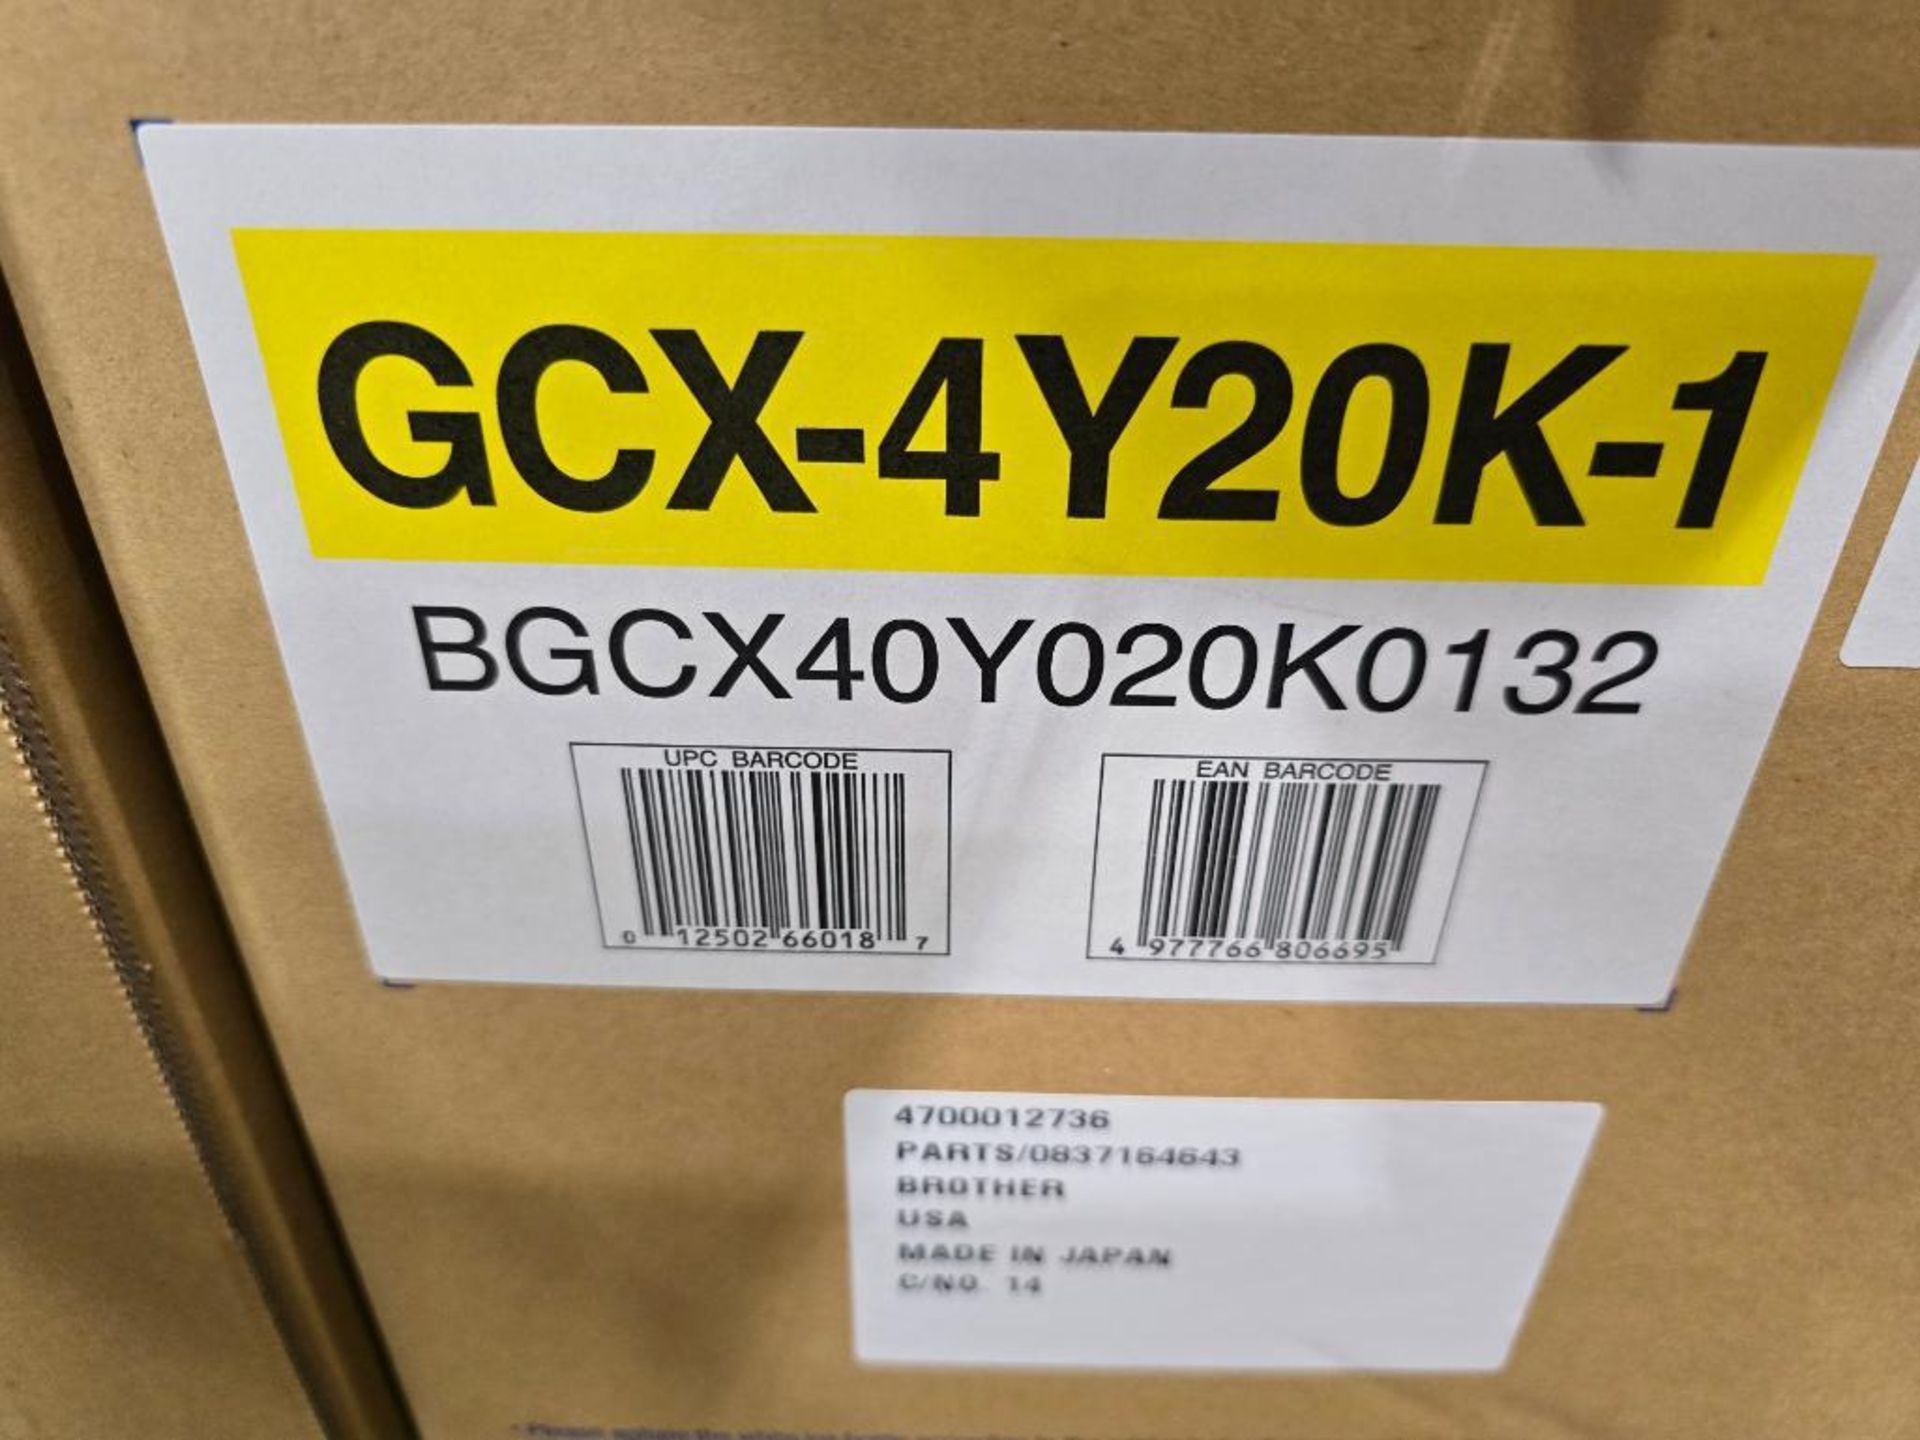 Brother GCX-4Y20K-1 Yellow Ink, 18-Liter Container, Innobella Textile, GTX Pro/GTX600 Series - Image 3 of 3